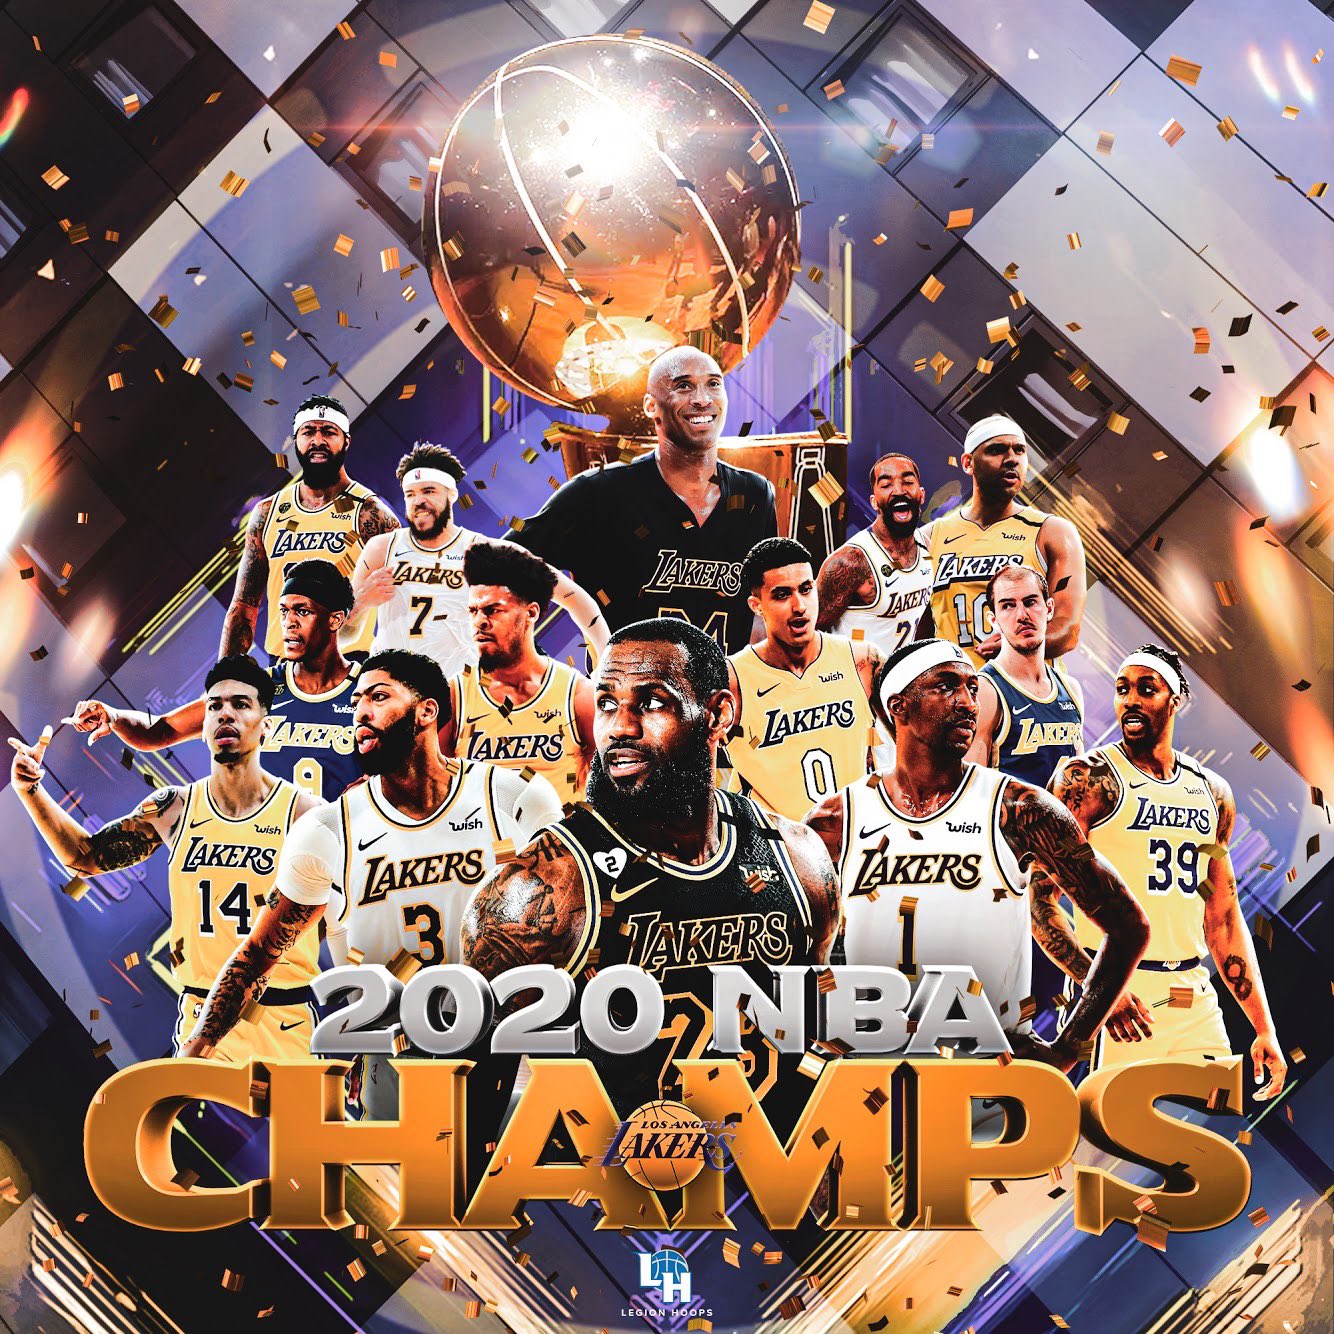 Lakers Wallpaper Iphone 2020 / Los Angeles Lakers NBA Champions 2020